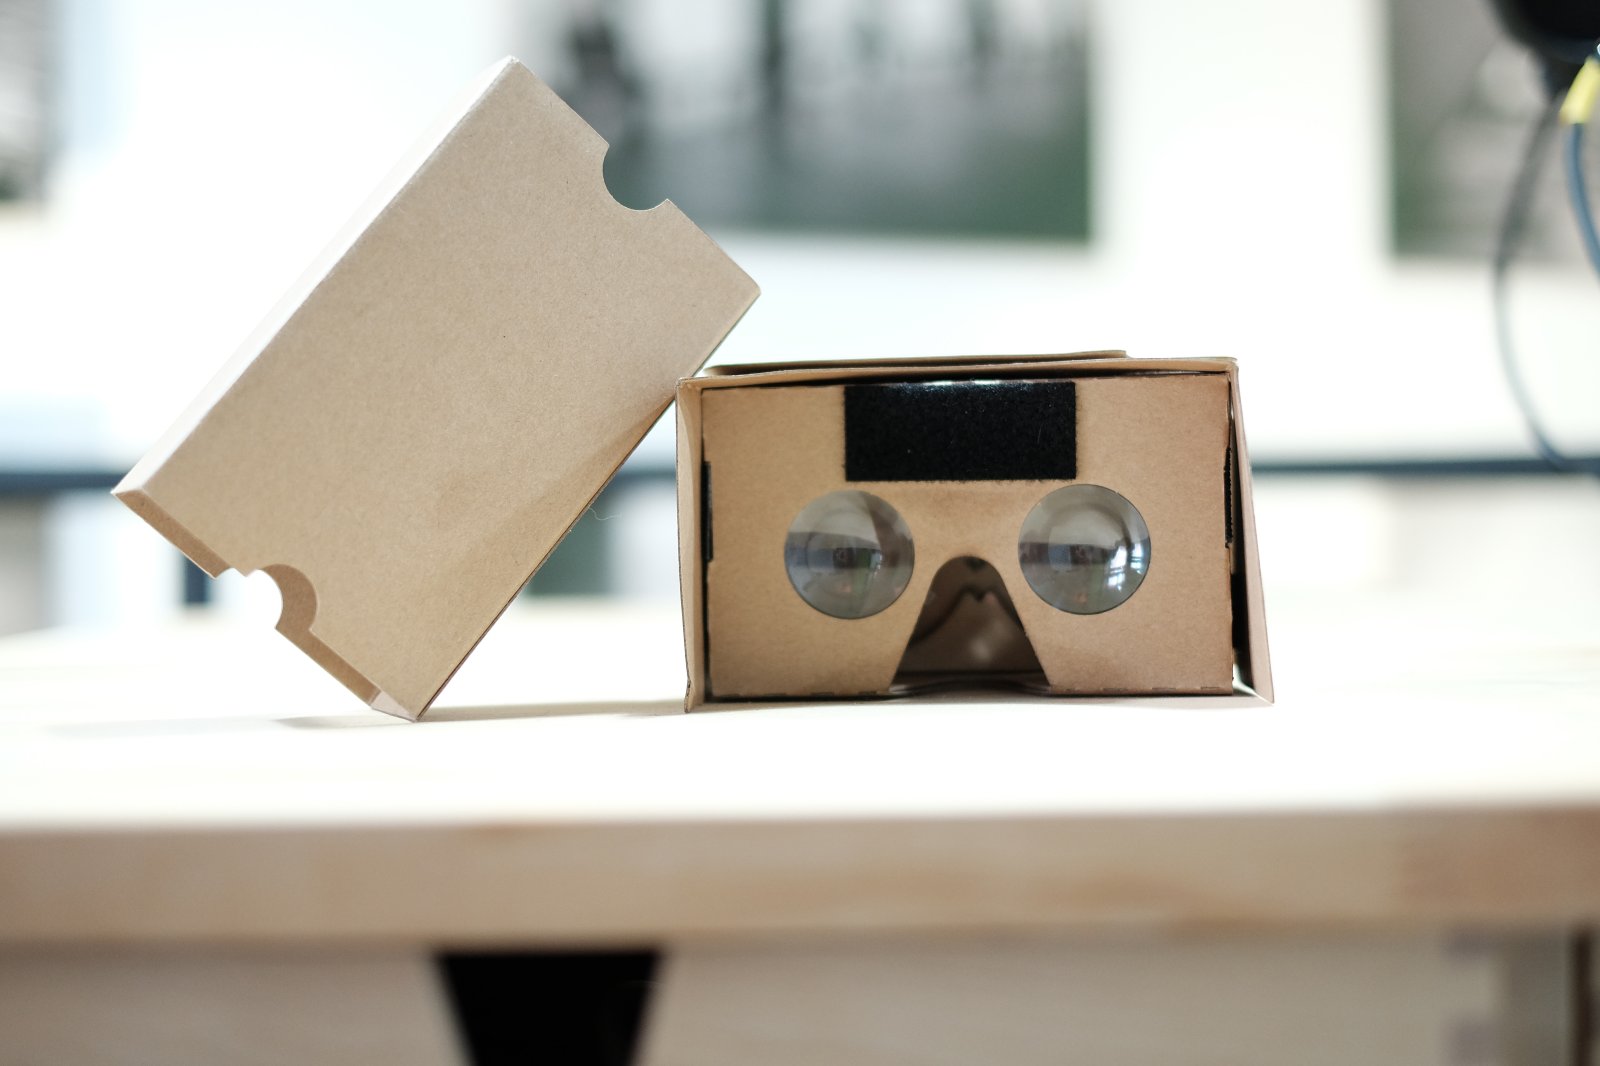 VR-Brille selber bauen mit Google Cardboard: So gelingt es dir - Futurezone